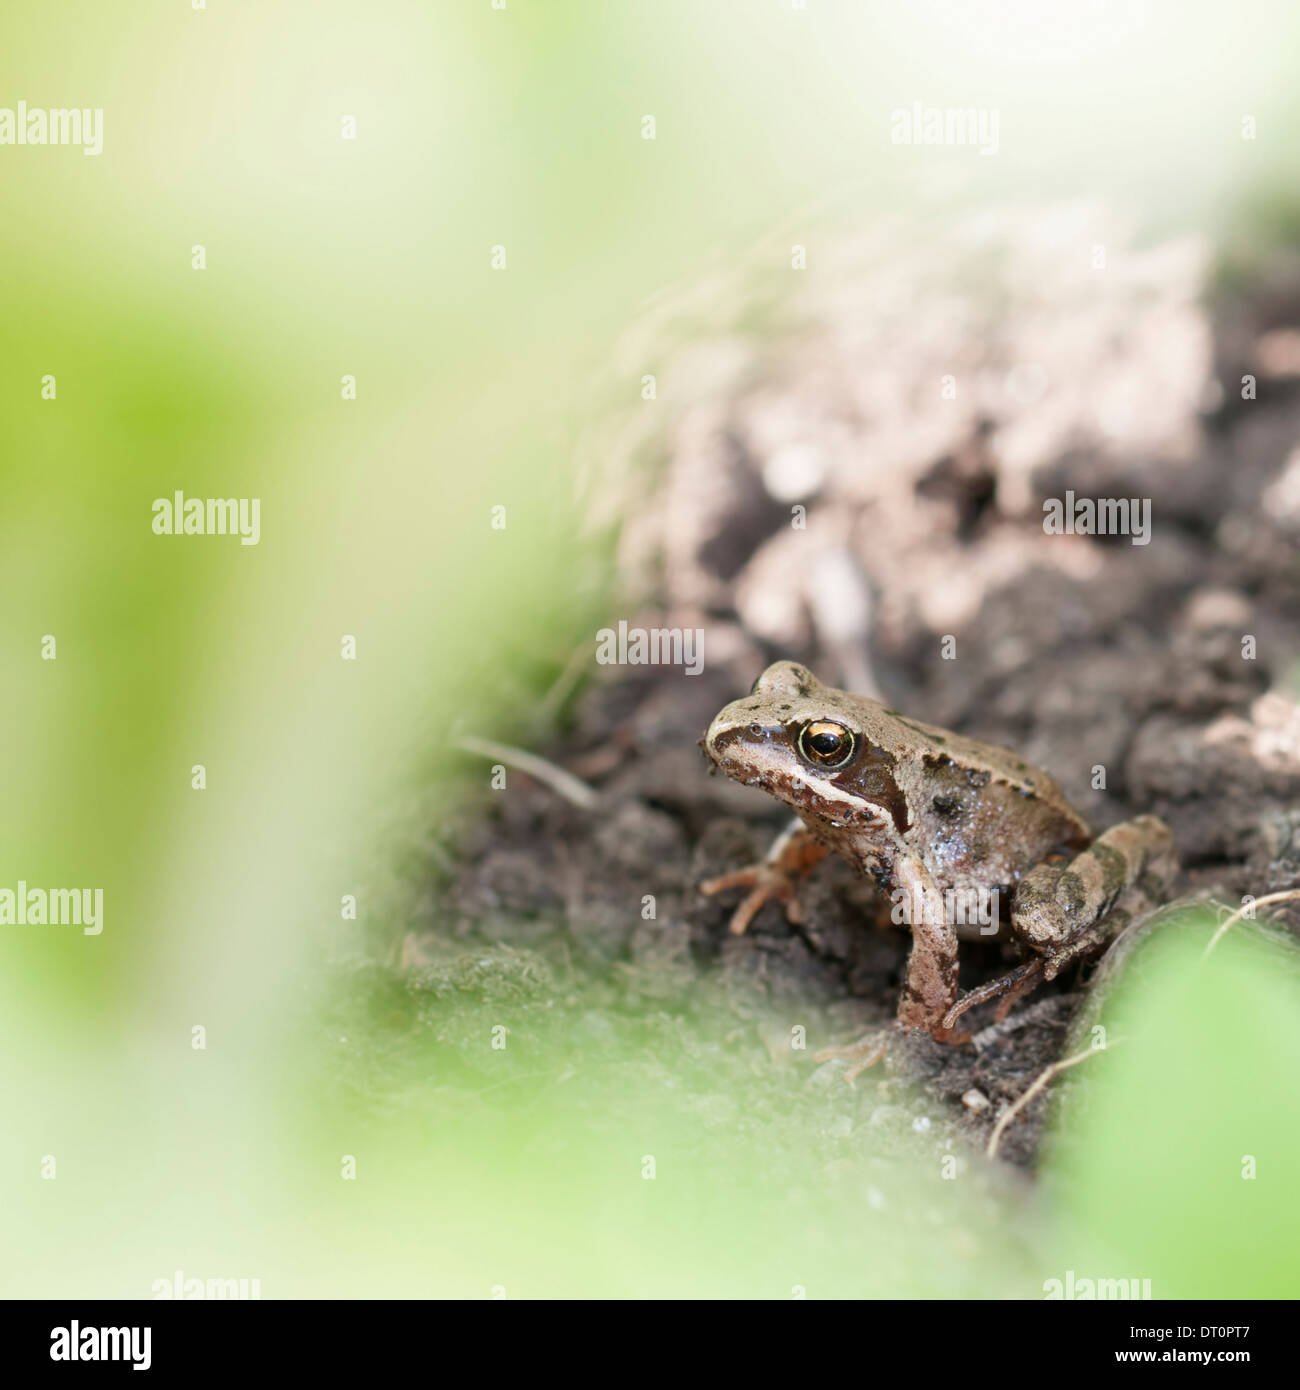 Tiny frog stock photo. Image of amphibian, hiding, nature - 98826642